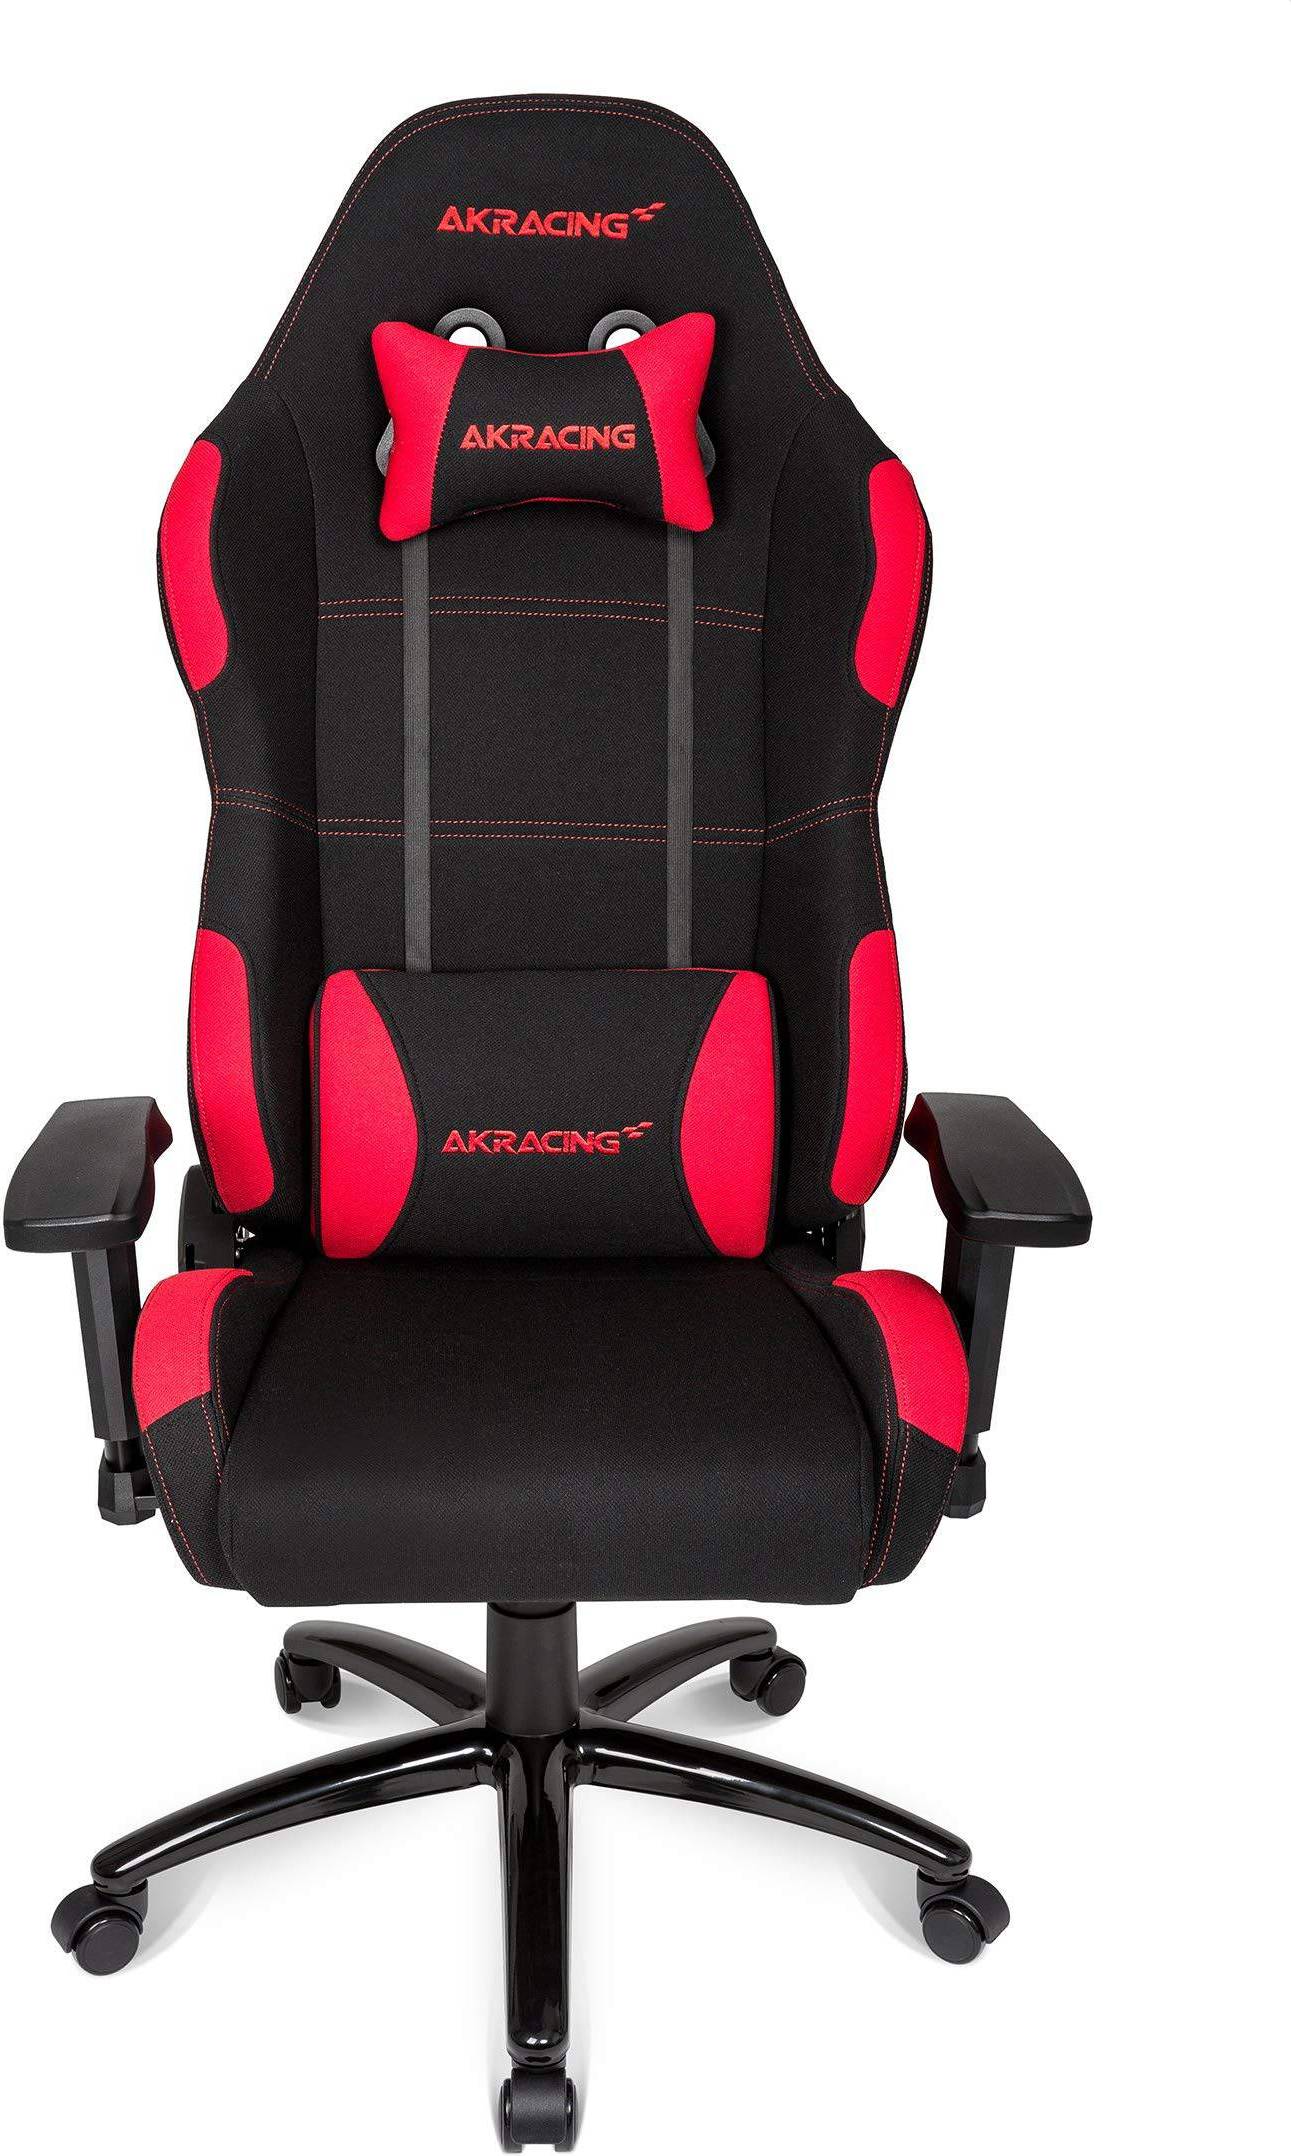  Bild på AKracing EX Gaming Chair - Black/Red gamingstol